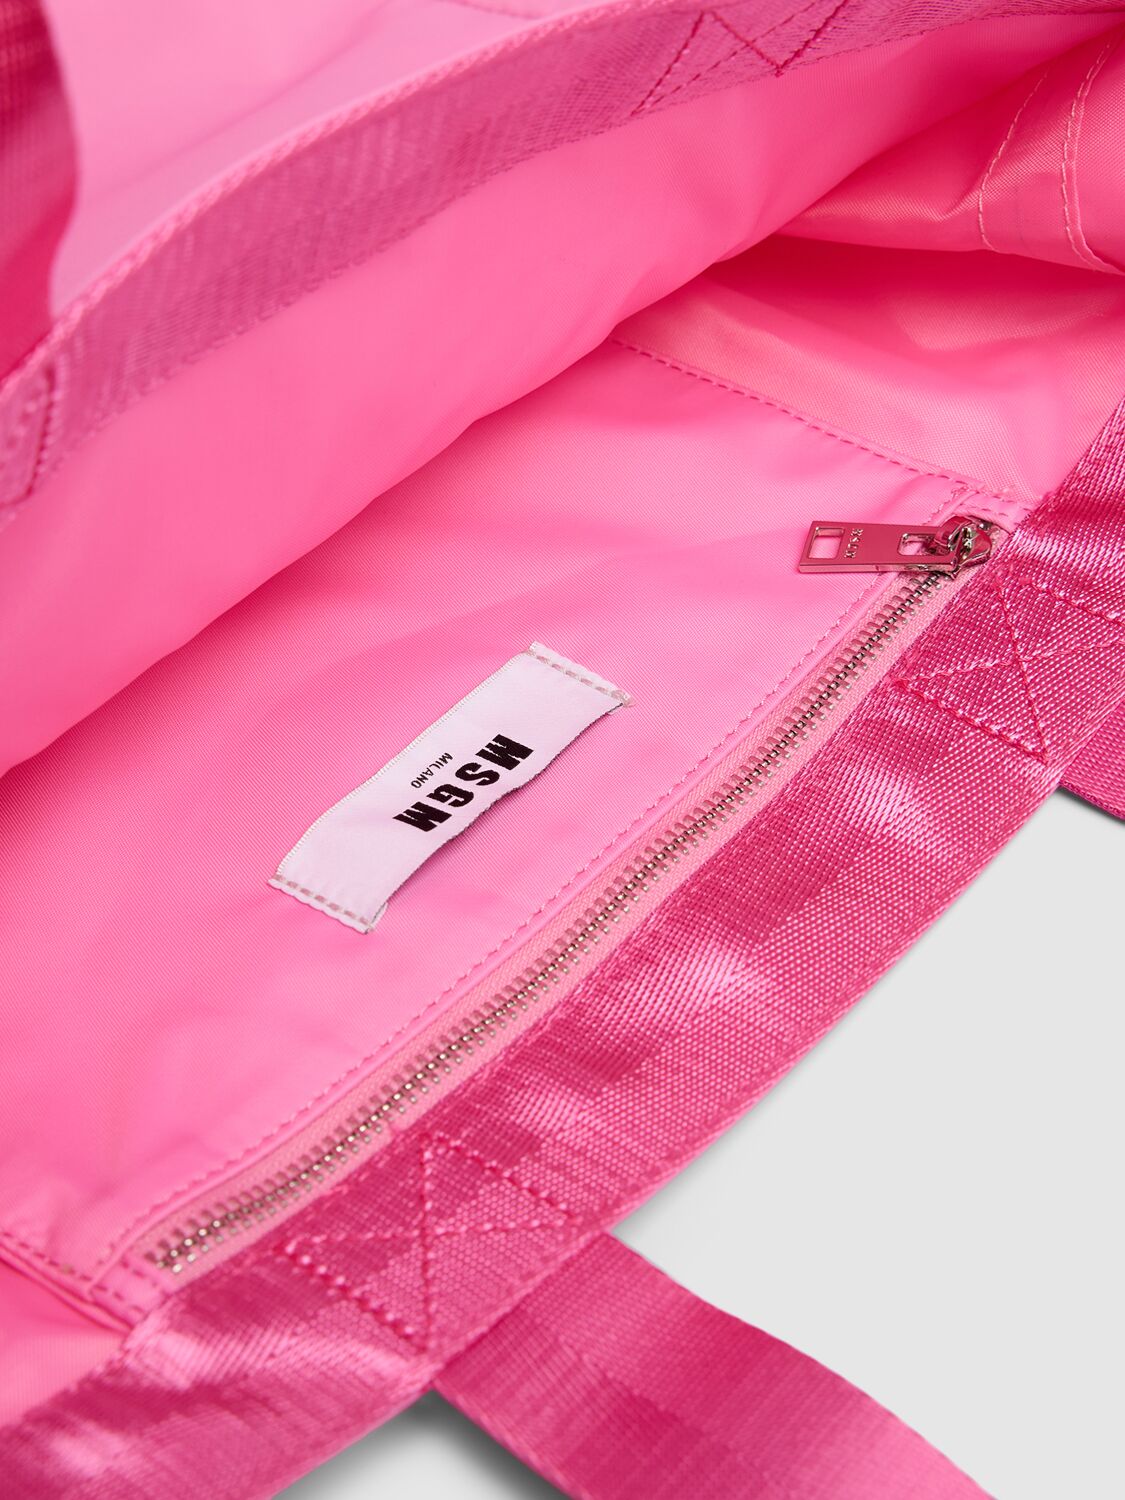 Shop Msgm Nylon Shopping Bag In Pink